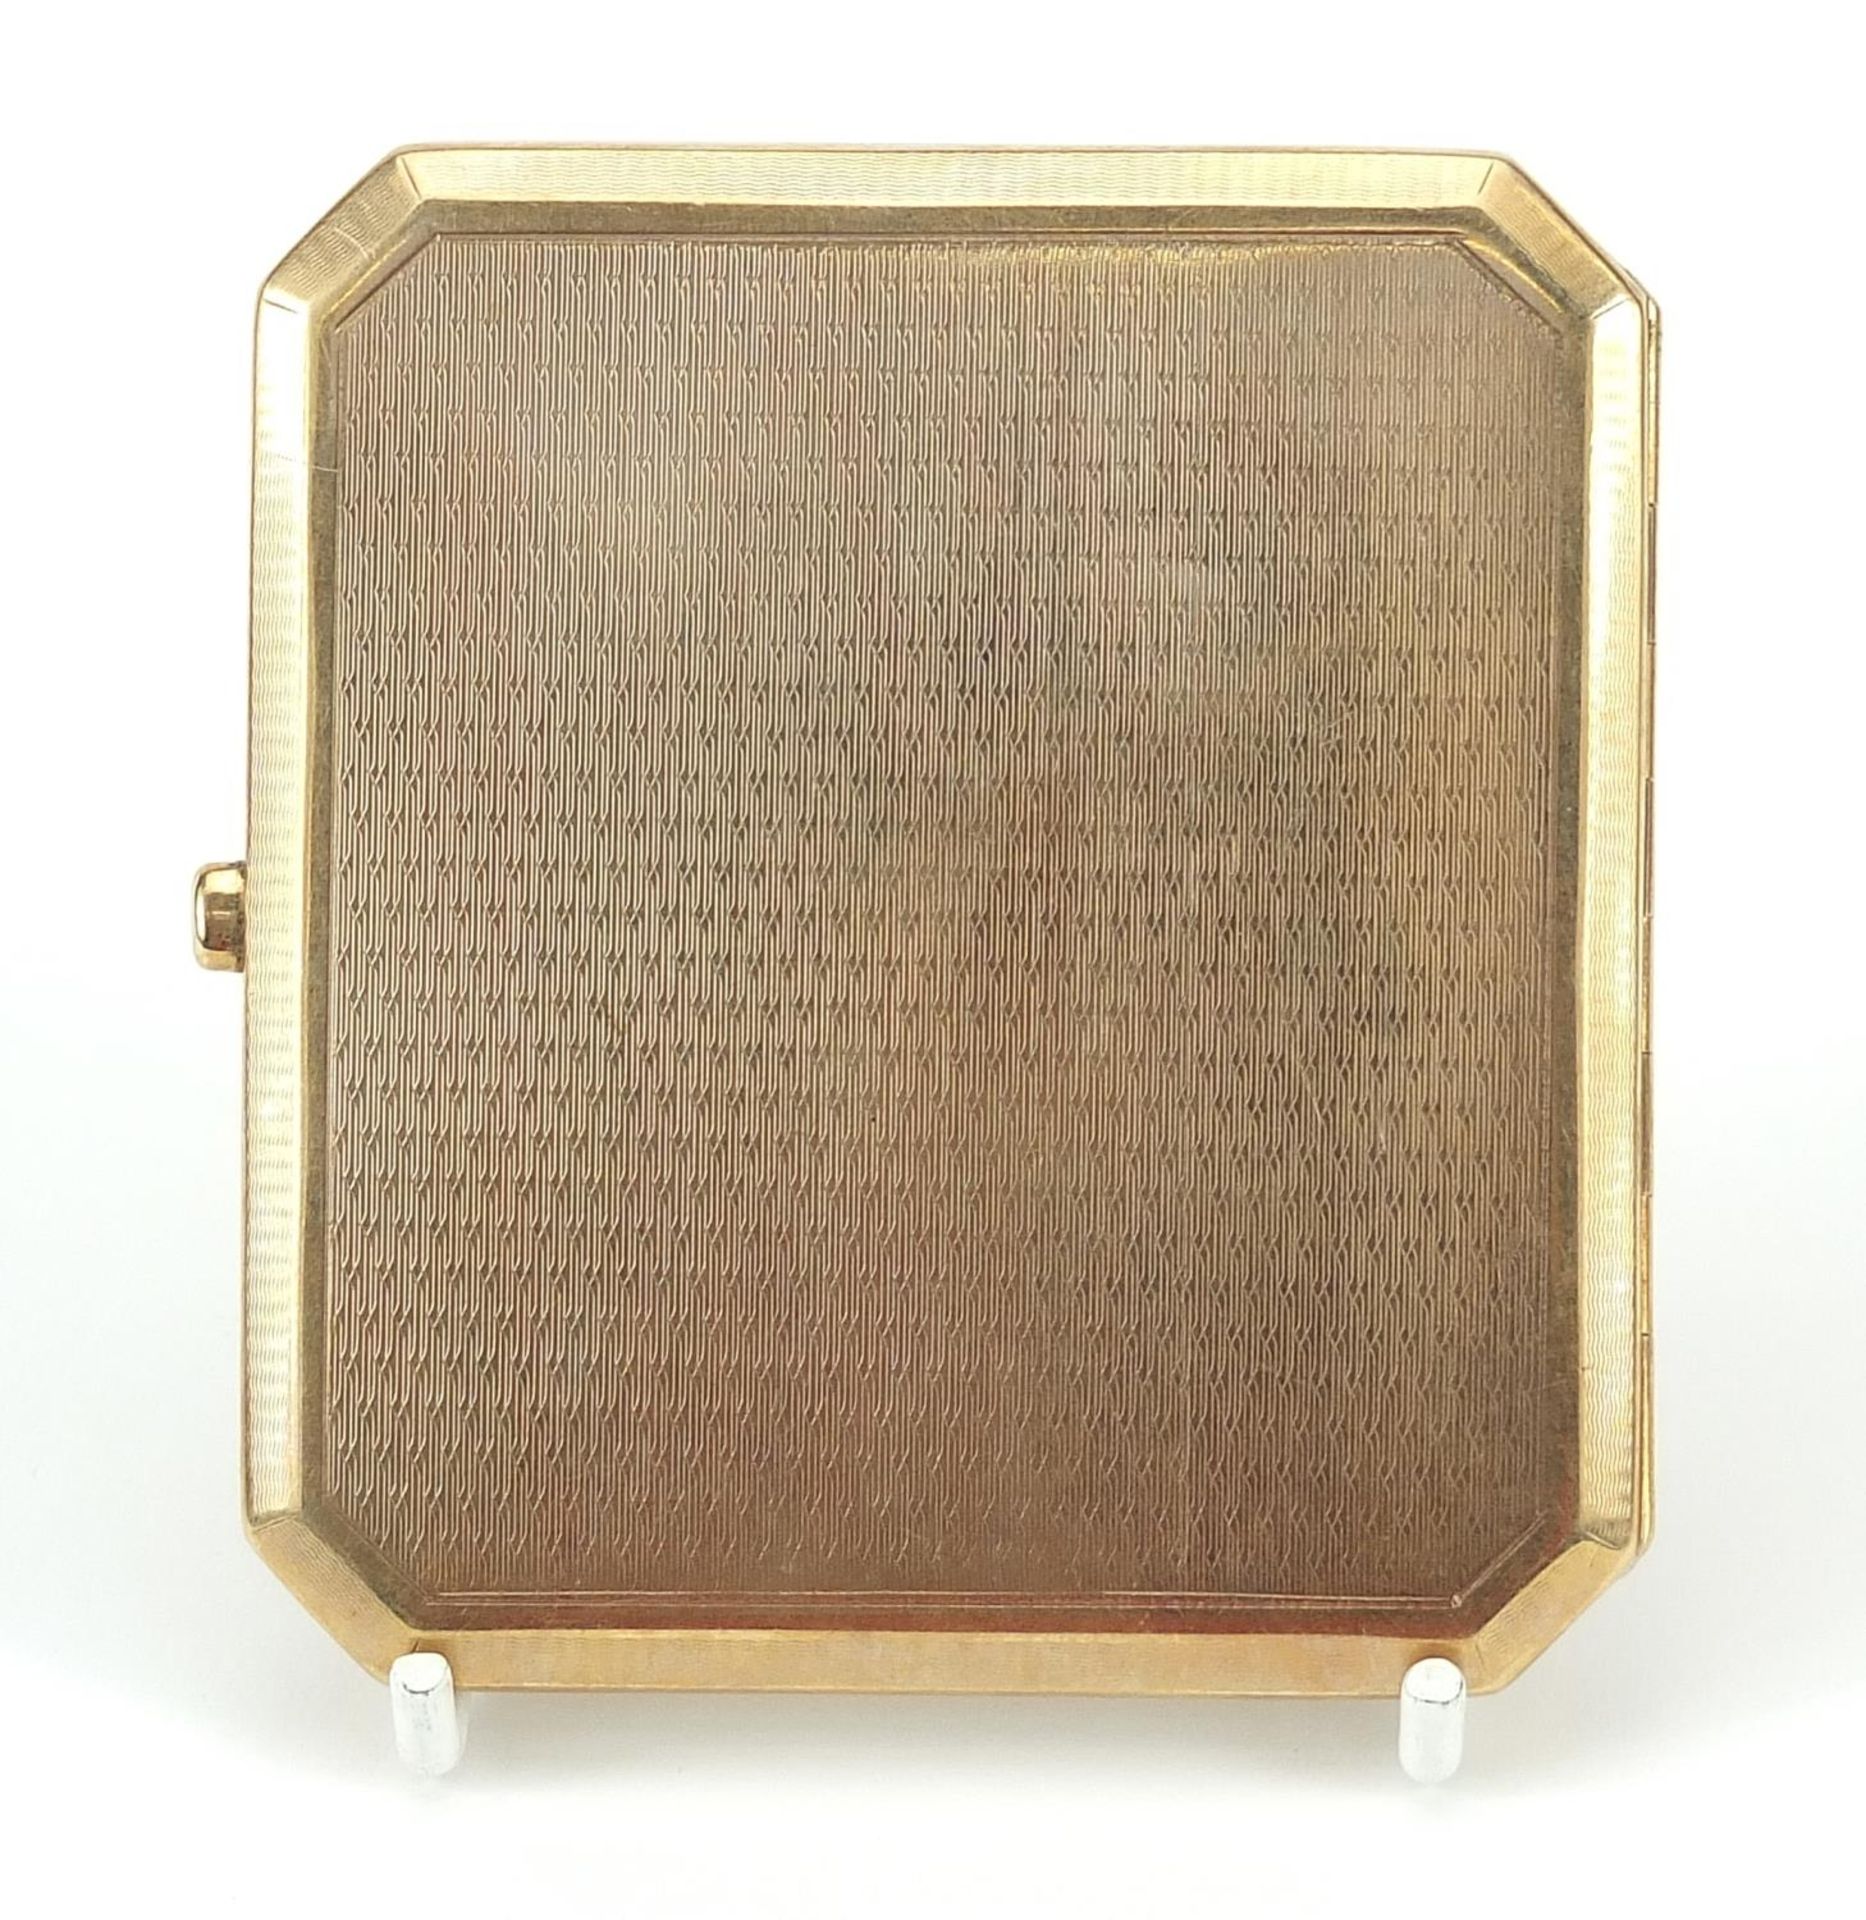 George V 9ct gold engine turned cigarette case, Birmingham 1919, 8.6cm wide, 105.5g - this lot is - Image 4 of 4